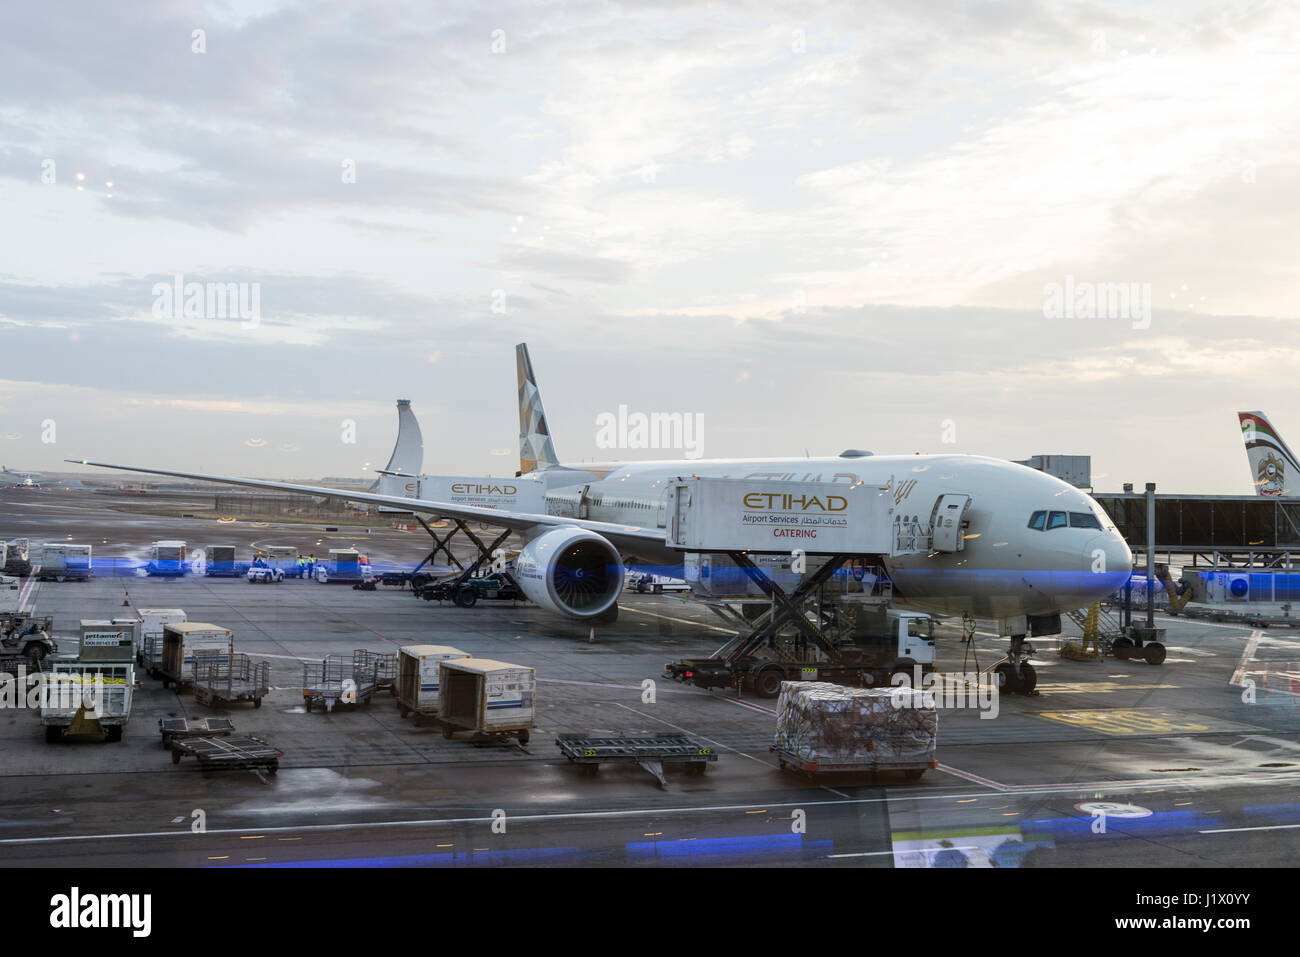 Etihad Airbus at Abu Dhabi airport Stock Photo